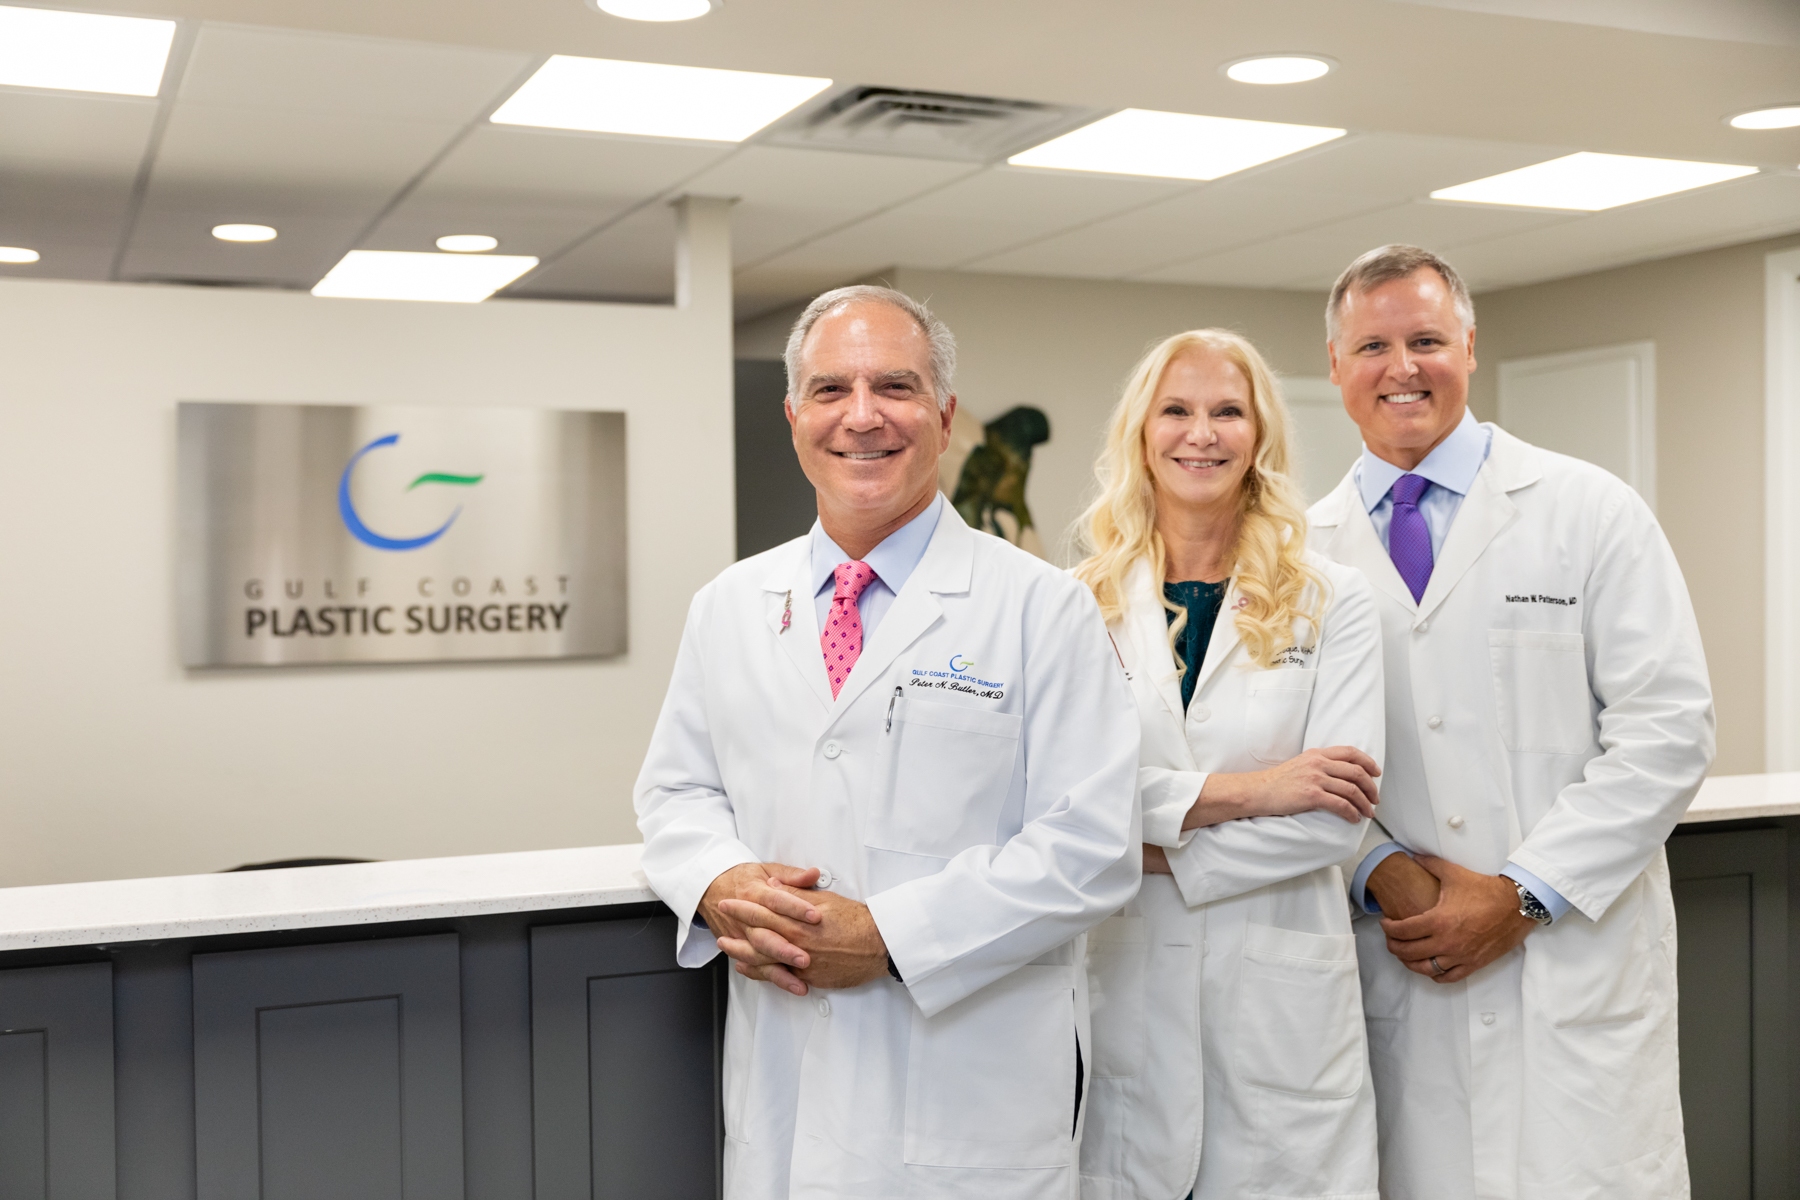 Front desk photo of Gulf Coast Plastic Surgery office